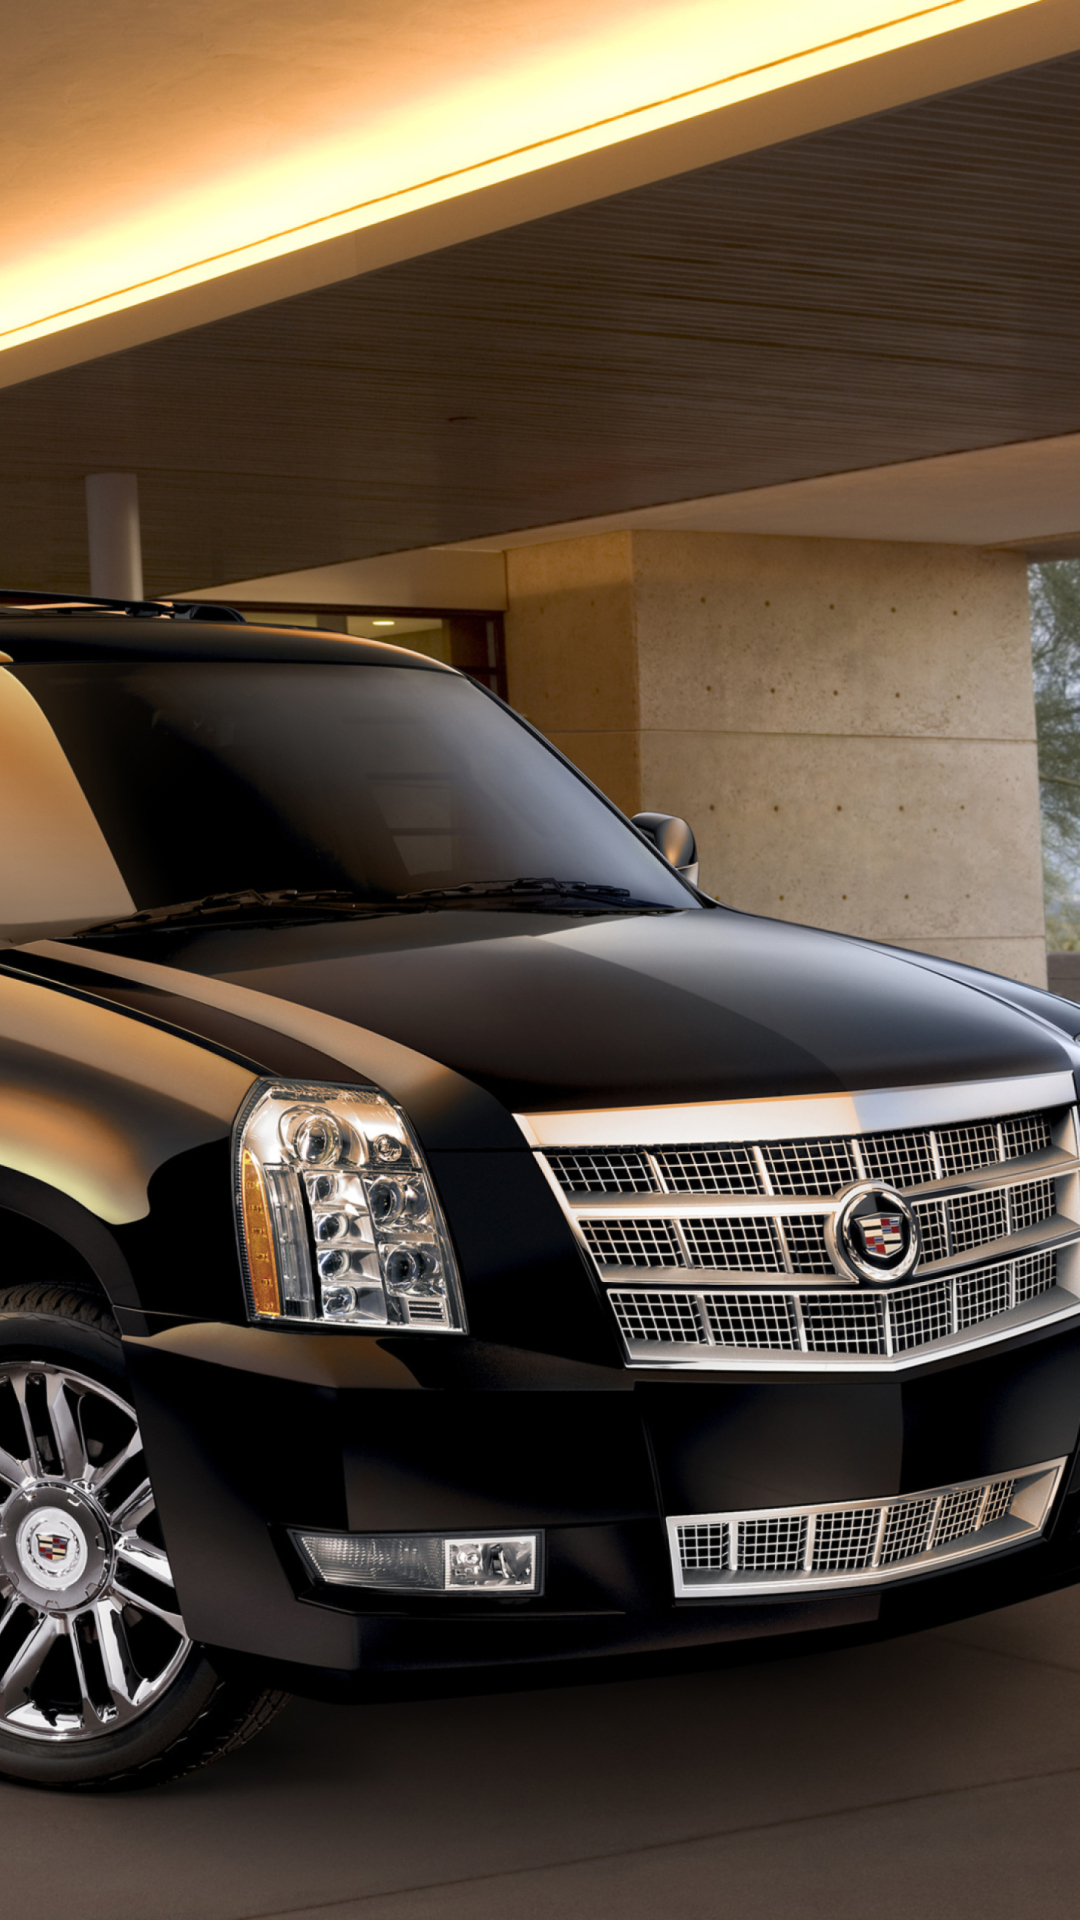 Fondo de pantalla Cadillac Escalade Full-Size Luxury SUV 1080x1920